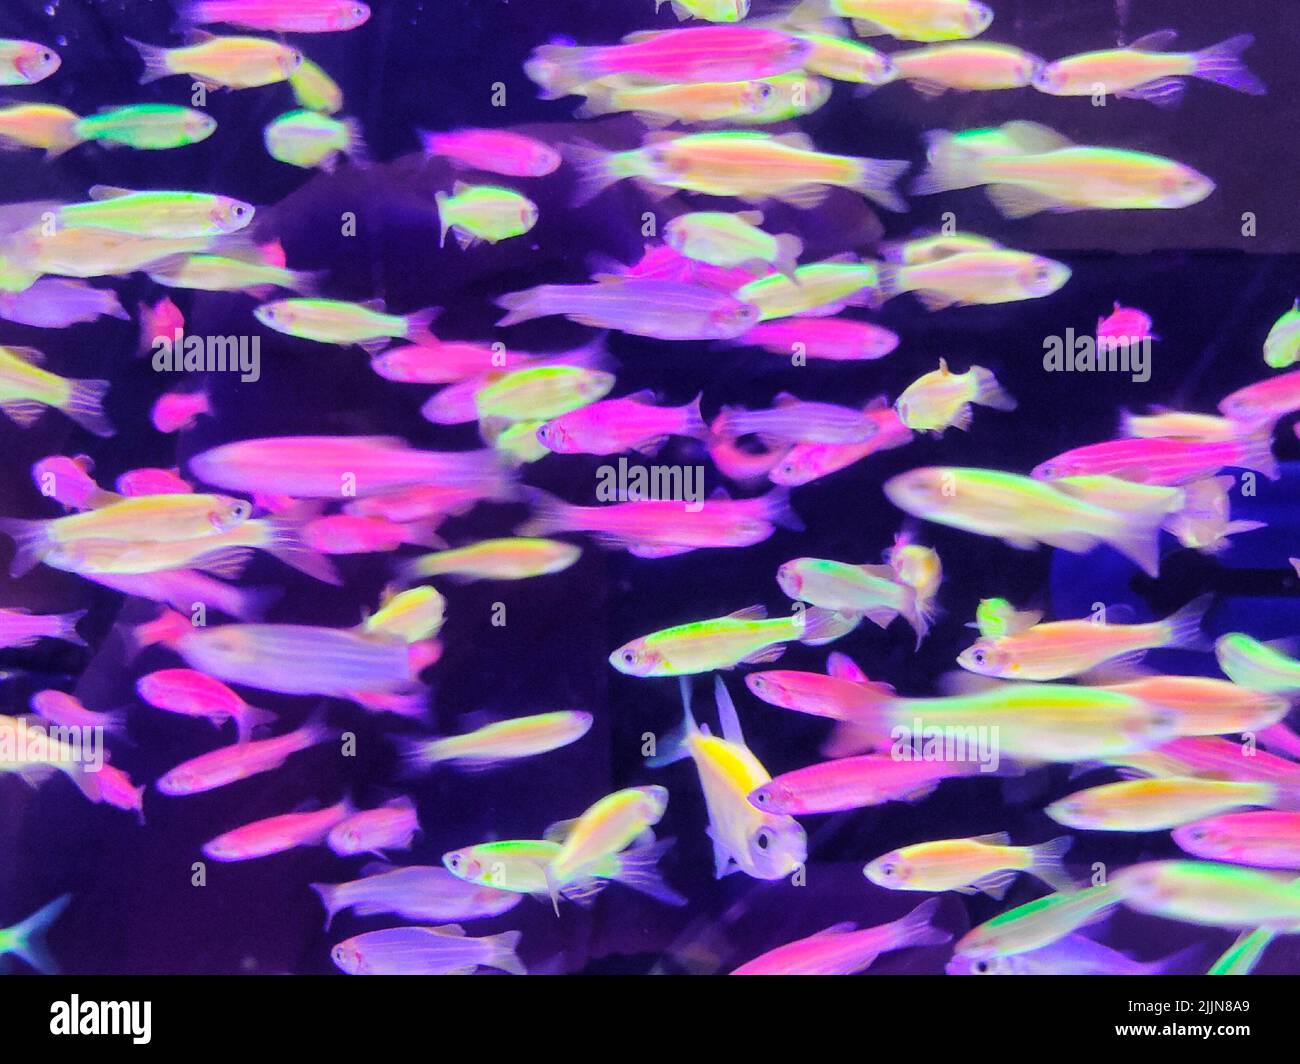 School of colourful fish swimming in an aquarium Stock Photo